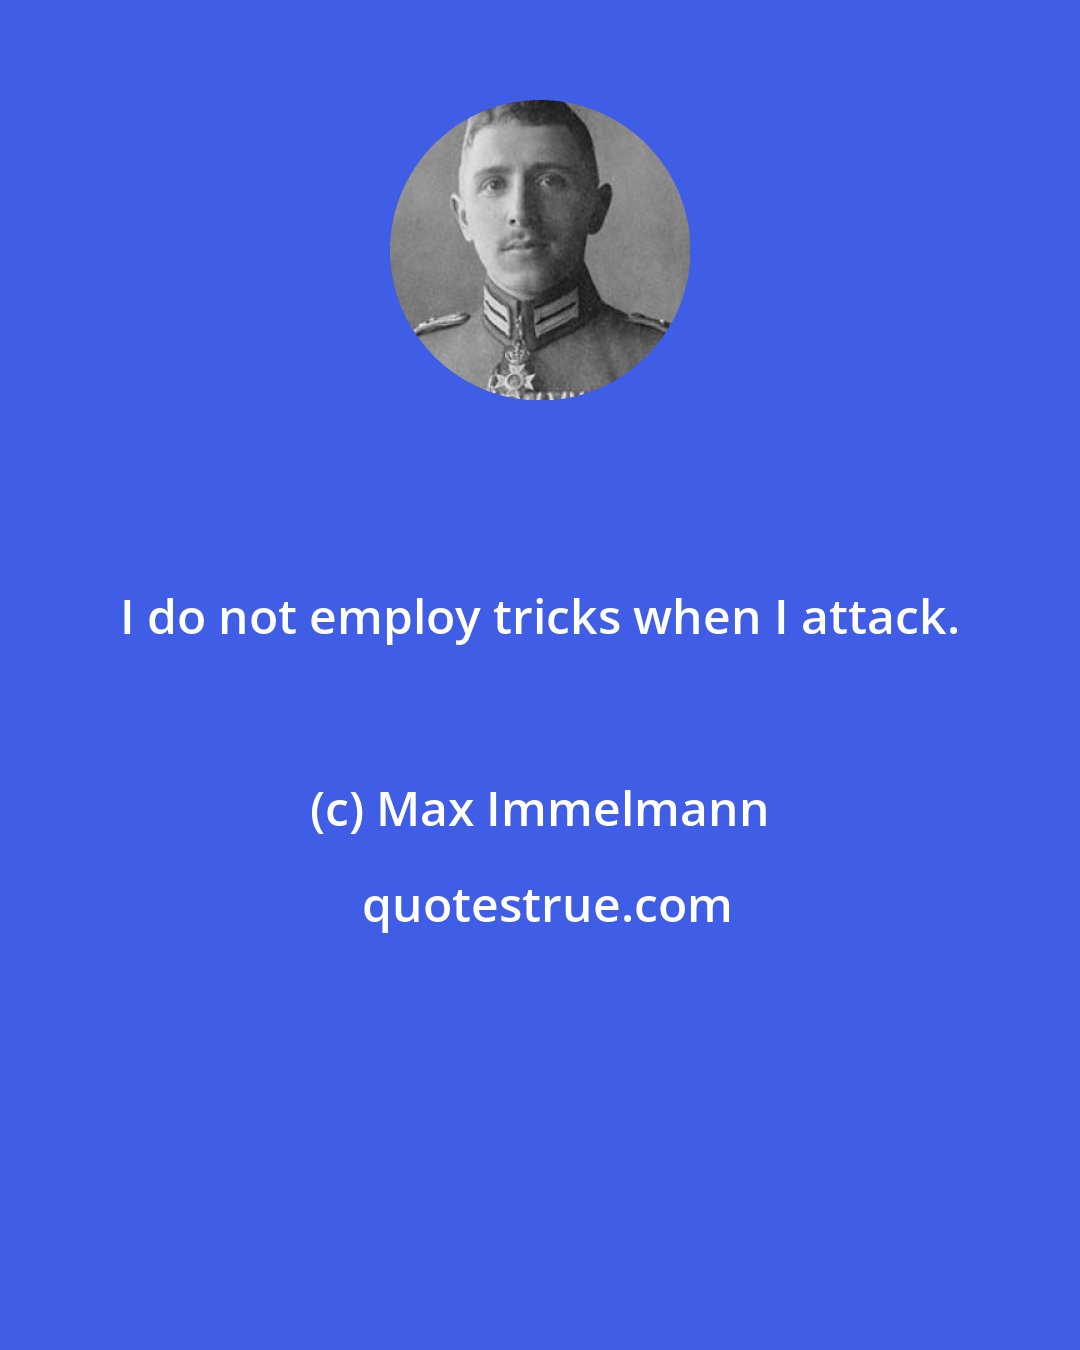 Max Immelmann: I do not employ tricks when I attack.